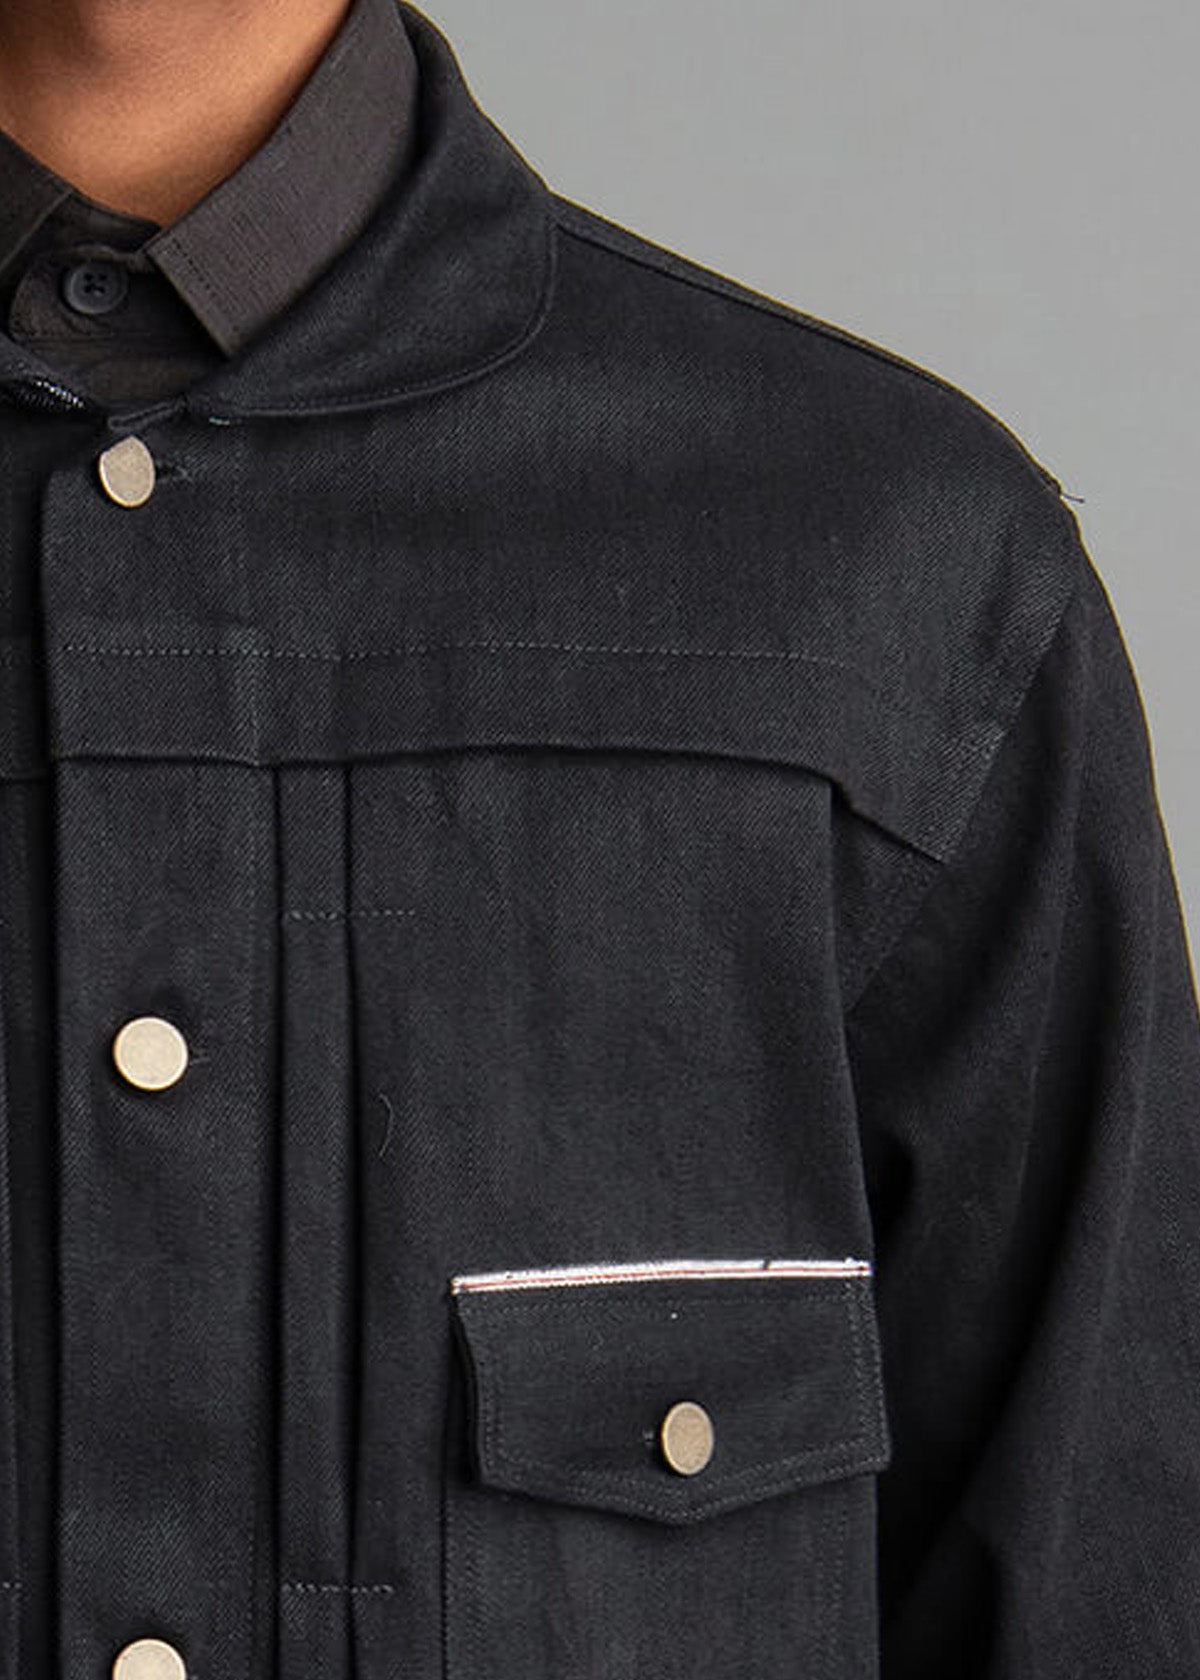 black denim jacket for men with two front pockets